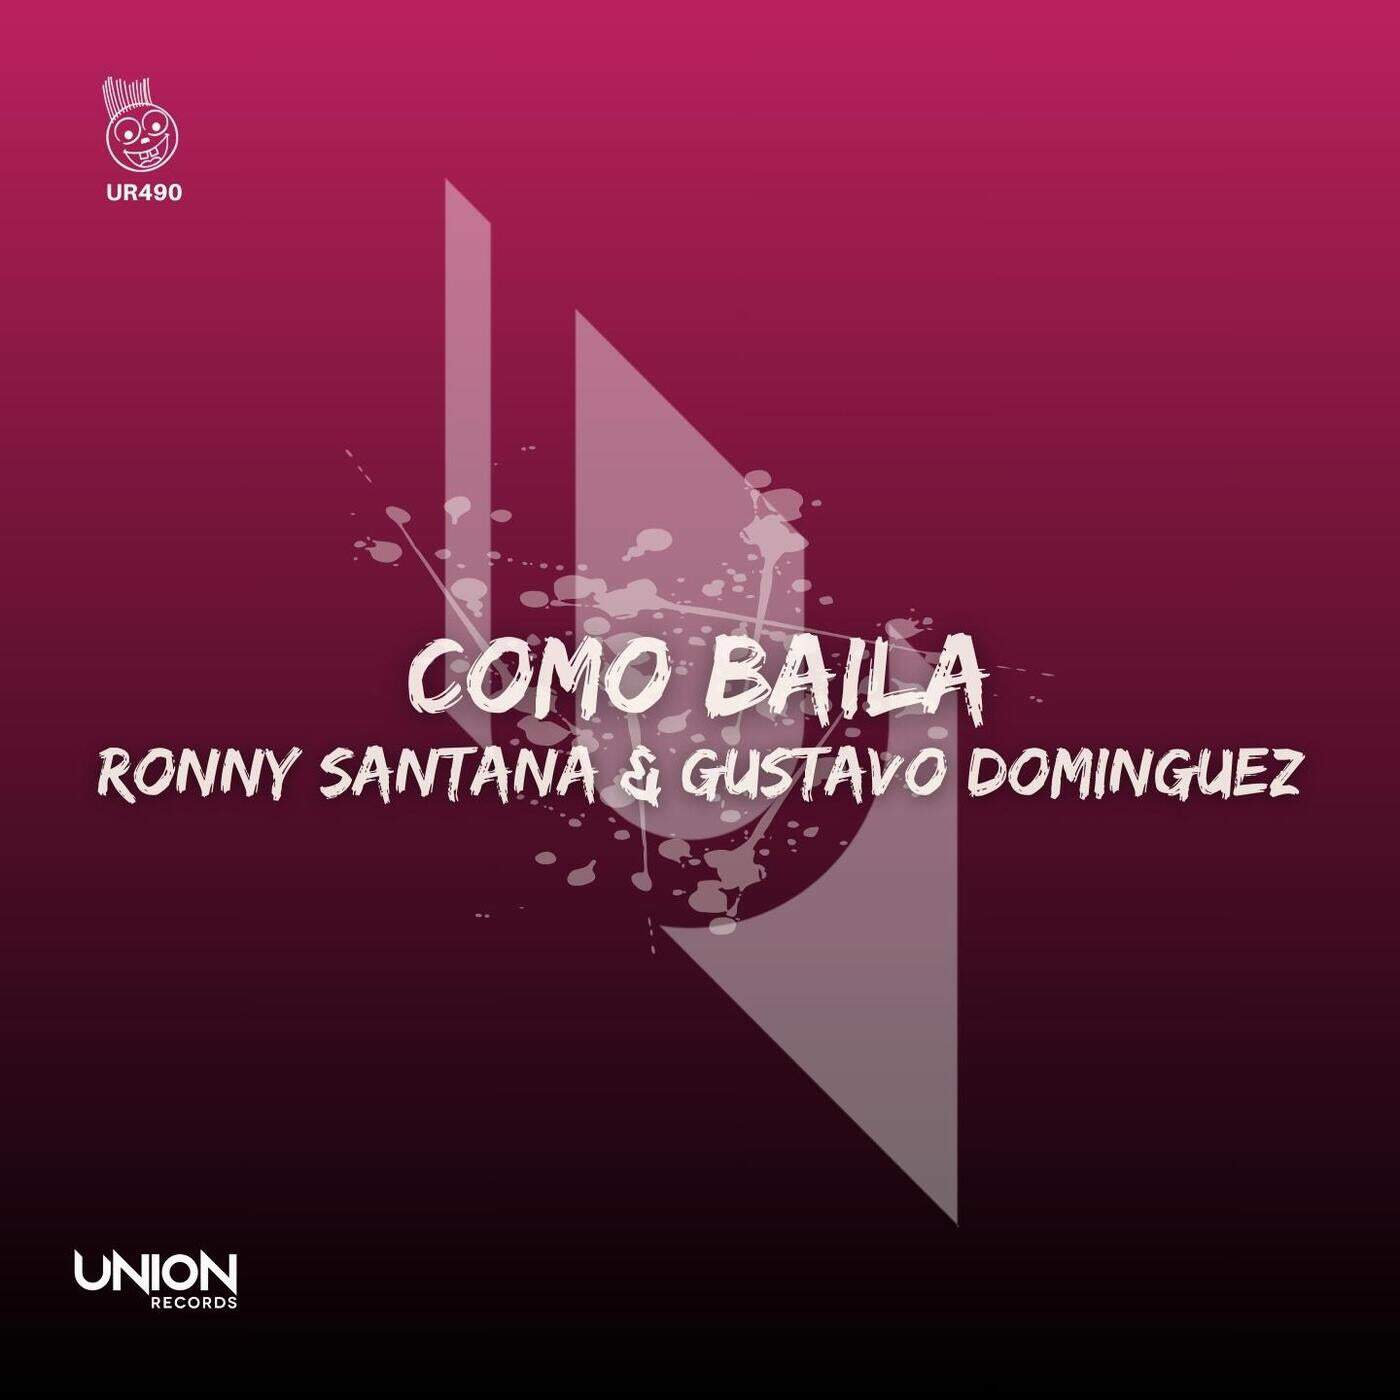 image cover: Ronny Santana, Gustavo Dominguez - Como Baila on UNION RECORDS (IT)